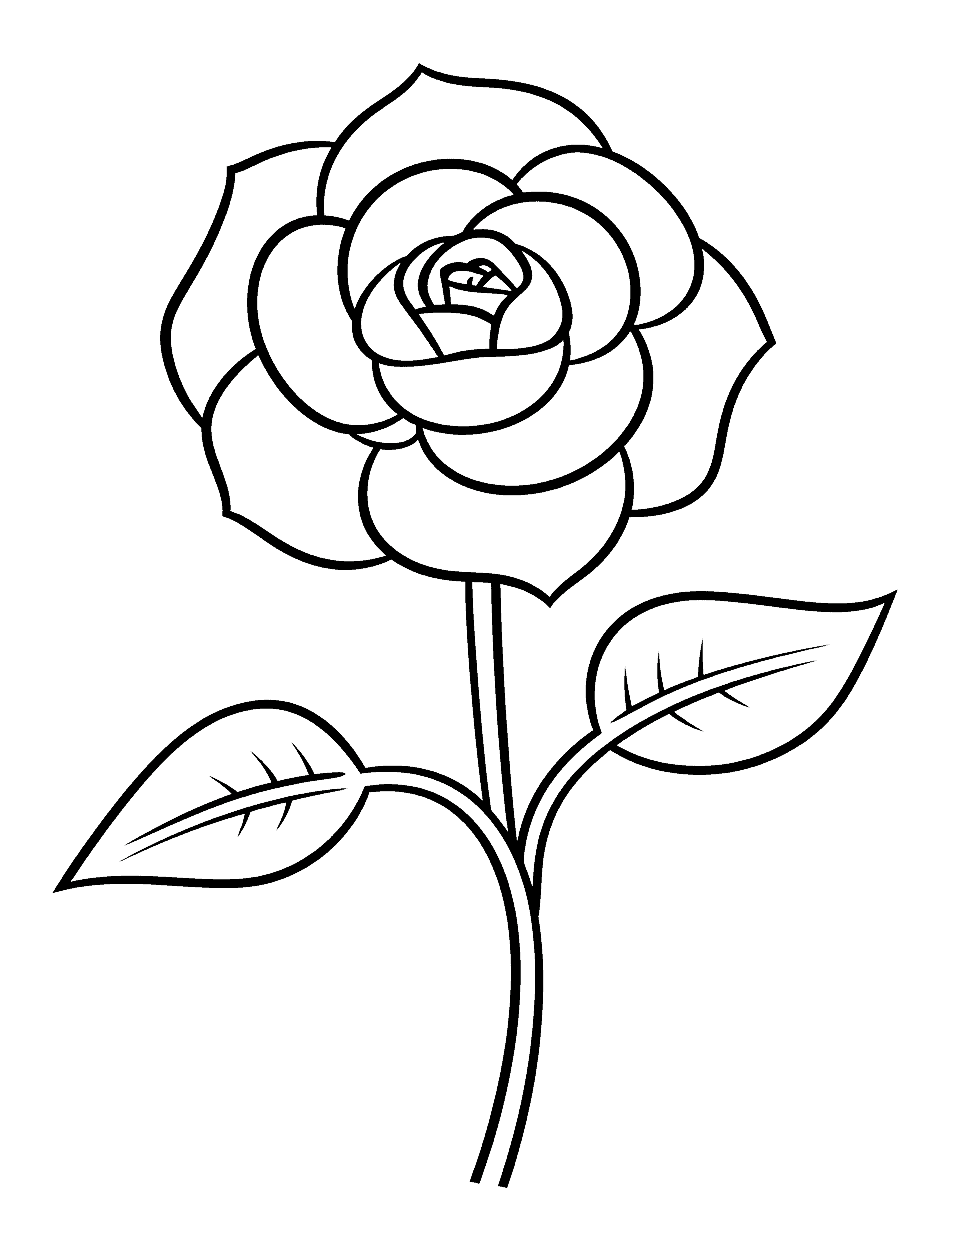 Cute Rose for Preschool Flower Coloring Page - A simplified, cute rose suitable for preschool kids.